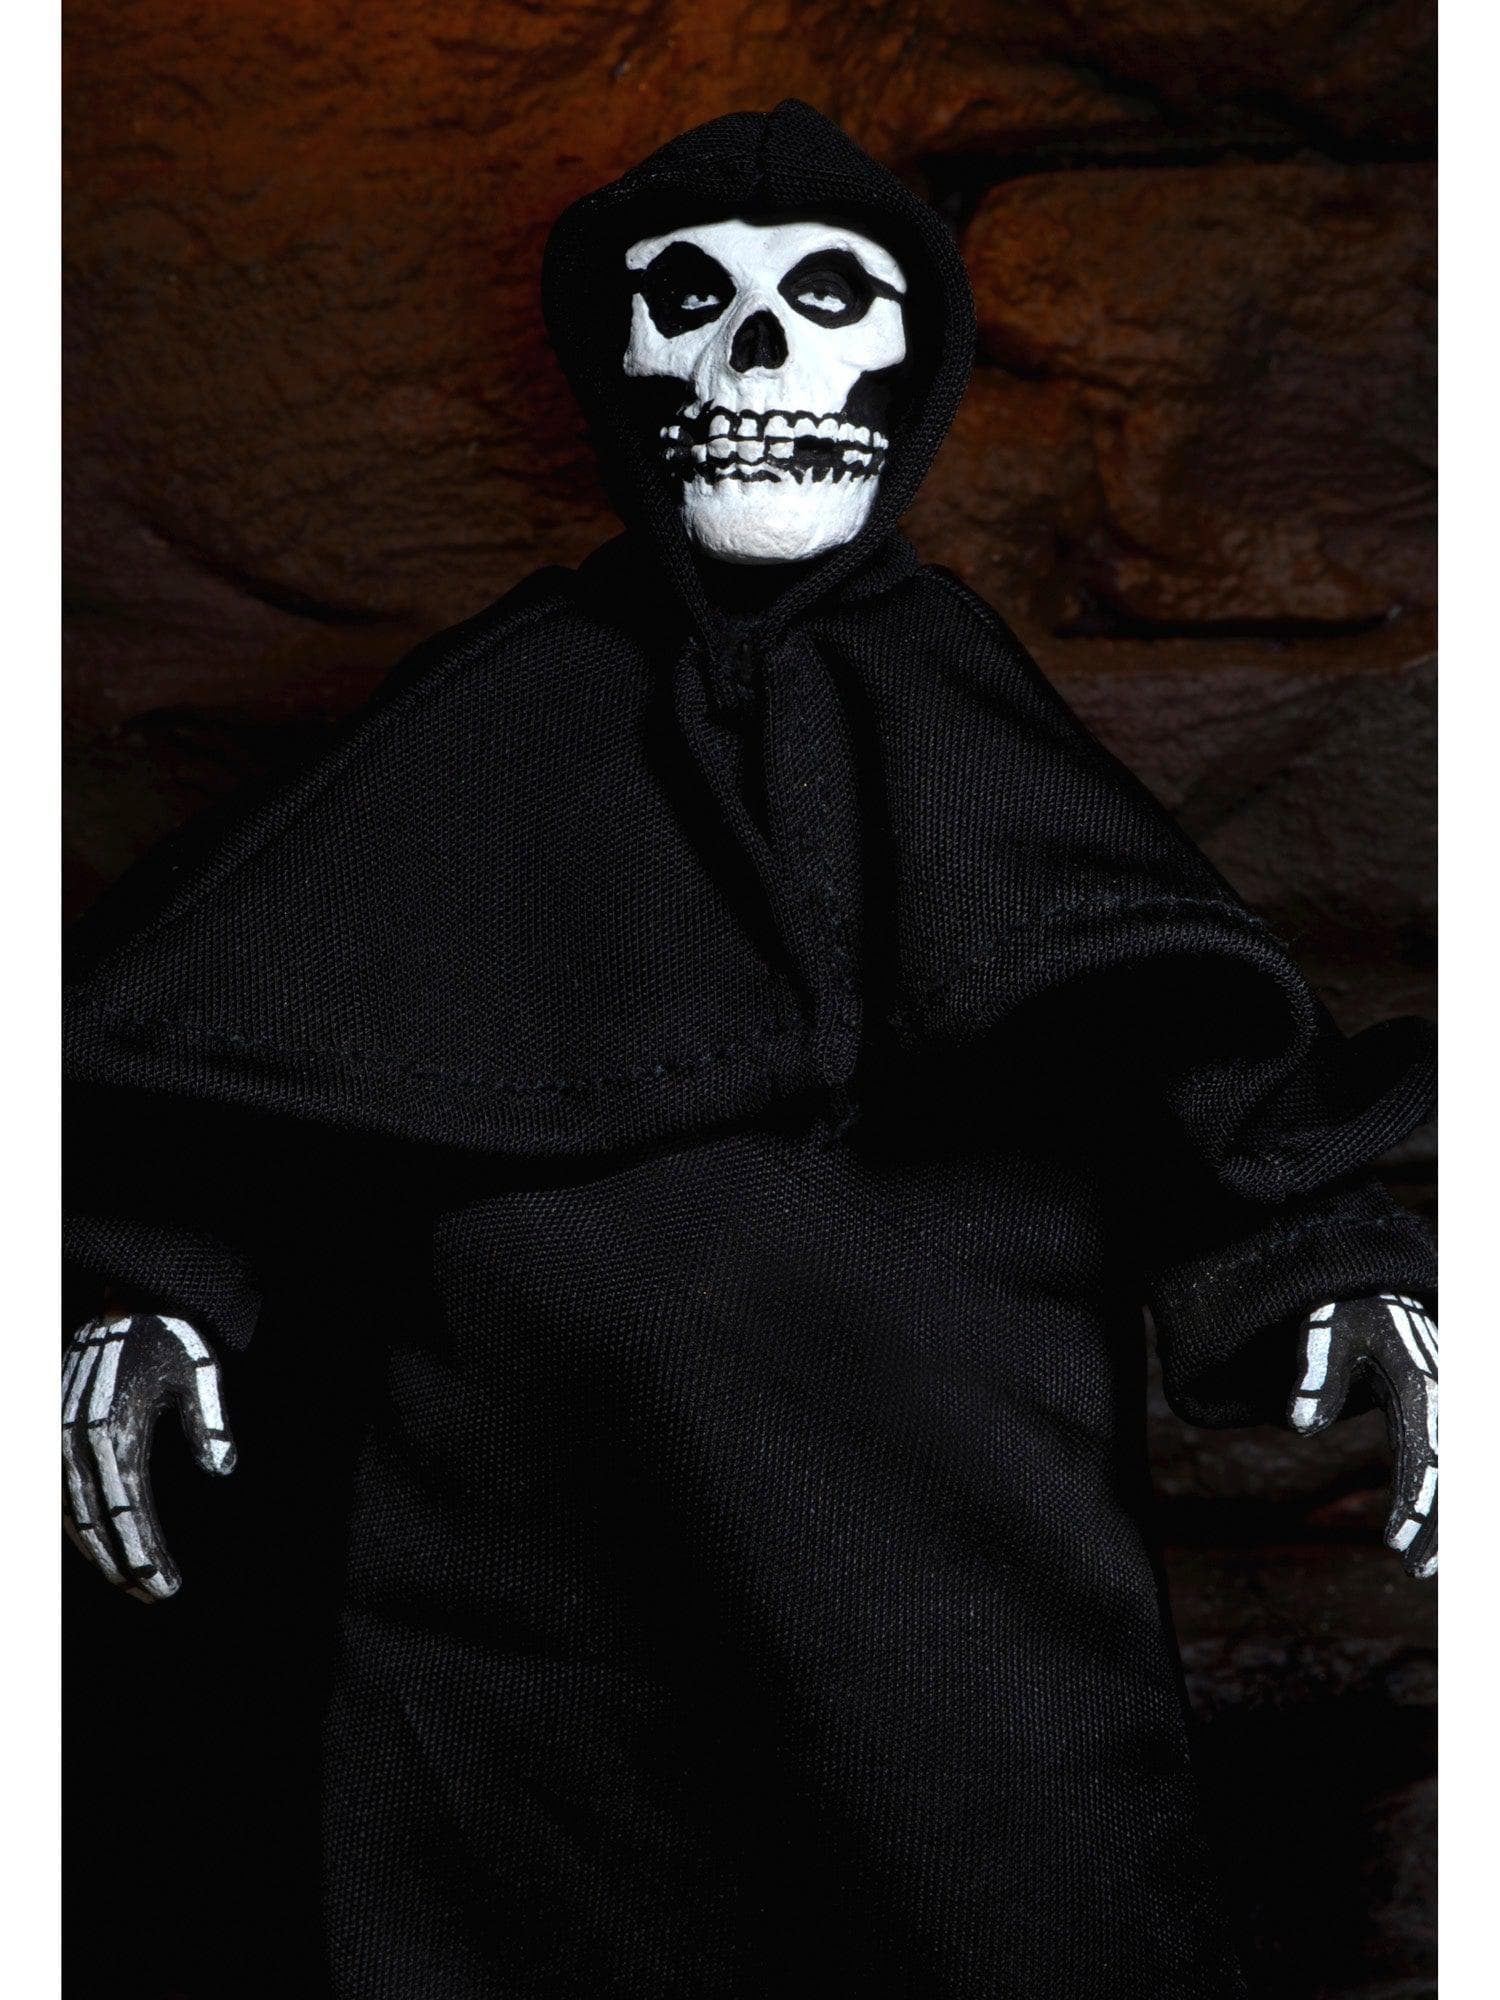 NECA - Misfits - 8" Clothed Figure - The Fiend (Black Robe) - costumes.com